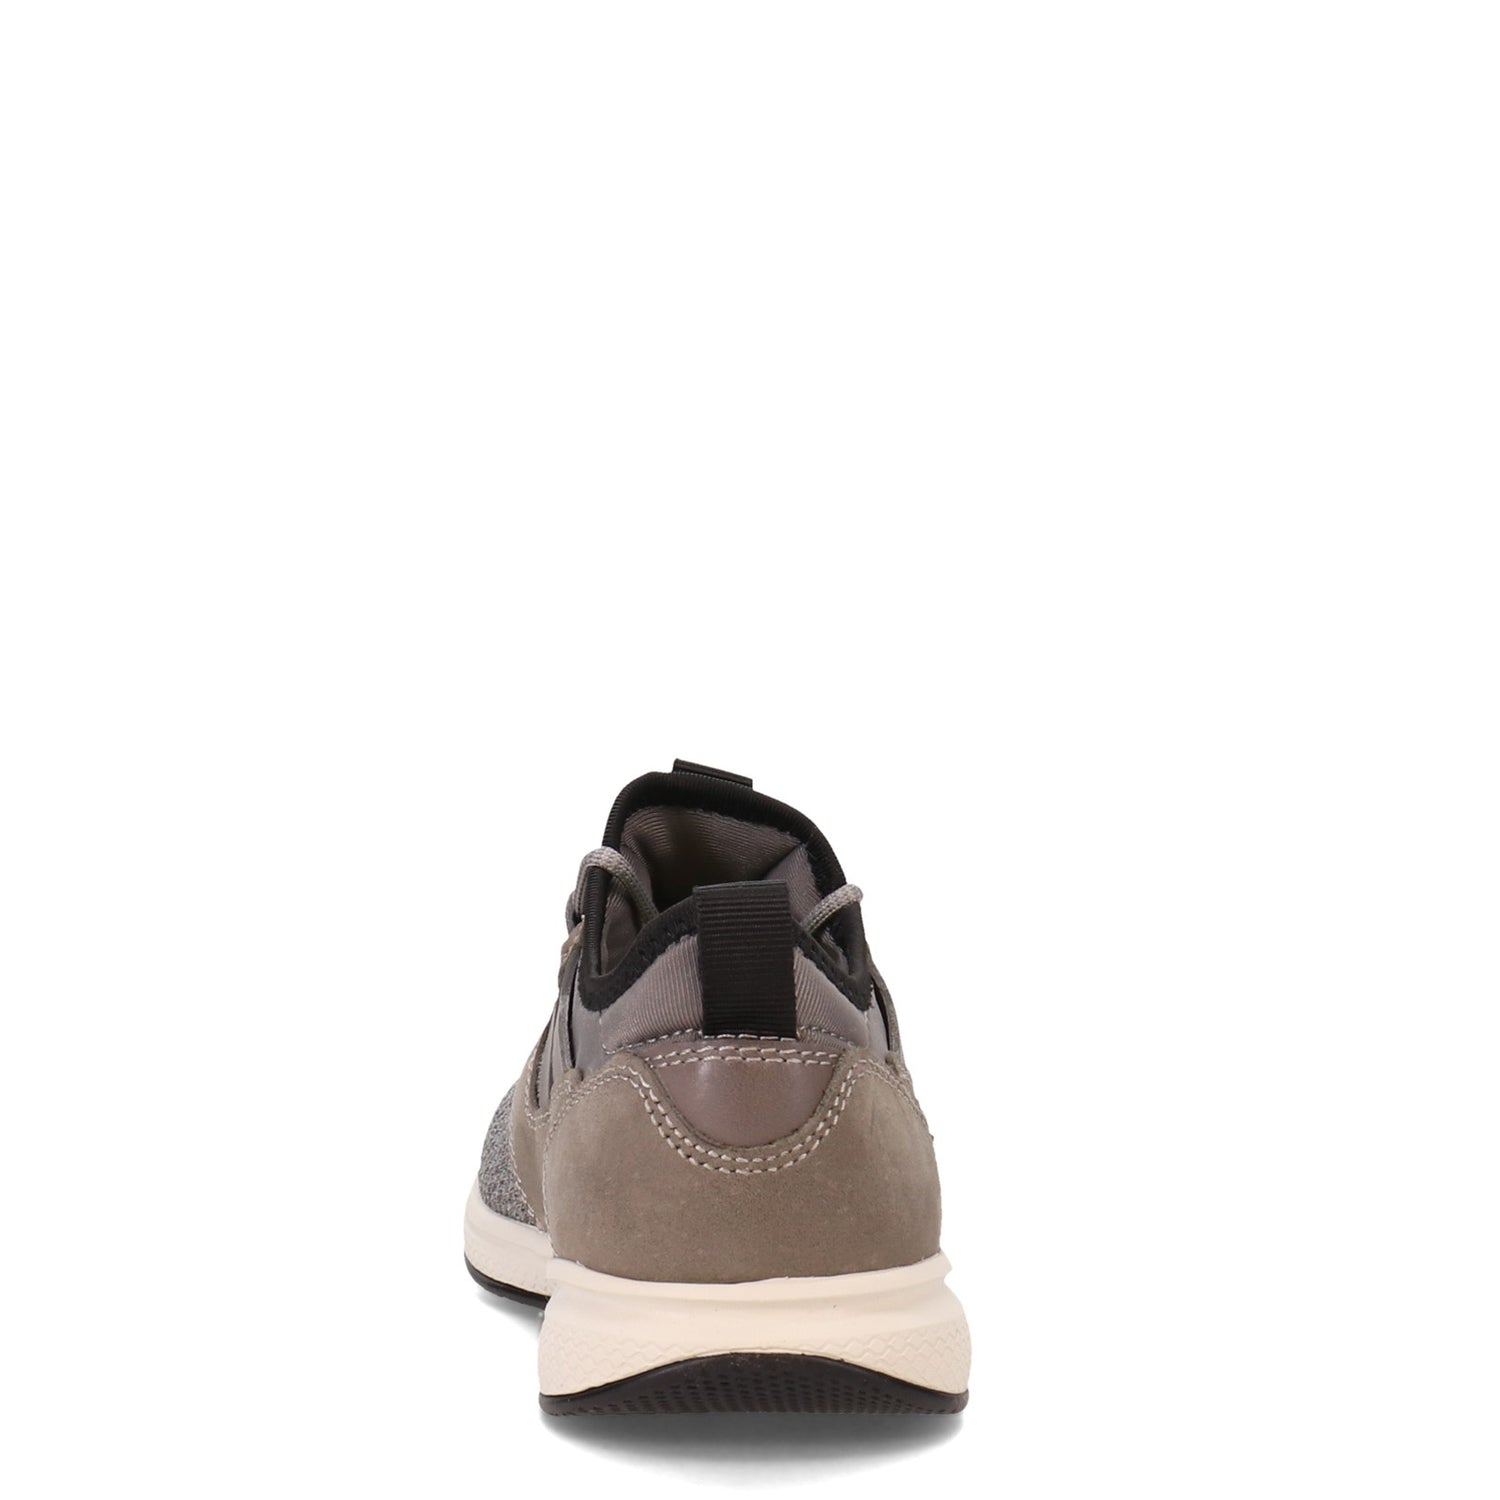 Peltz Shoes  Boy's Florsheim Great Lakes Knit Plain Toe Sneaker - Little Kid & Big Kid GRAY 16671-020